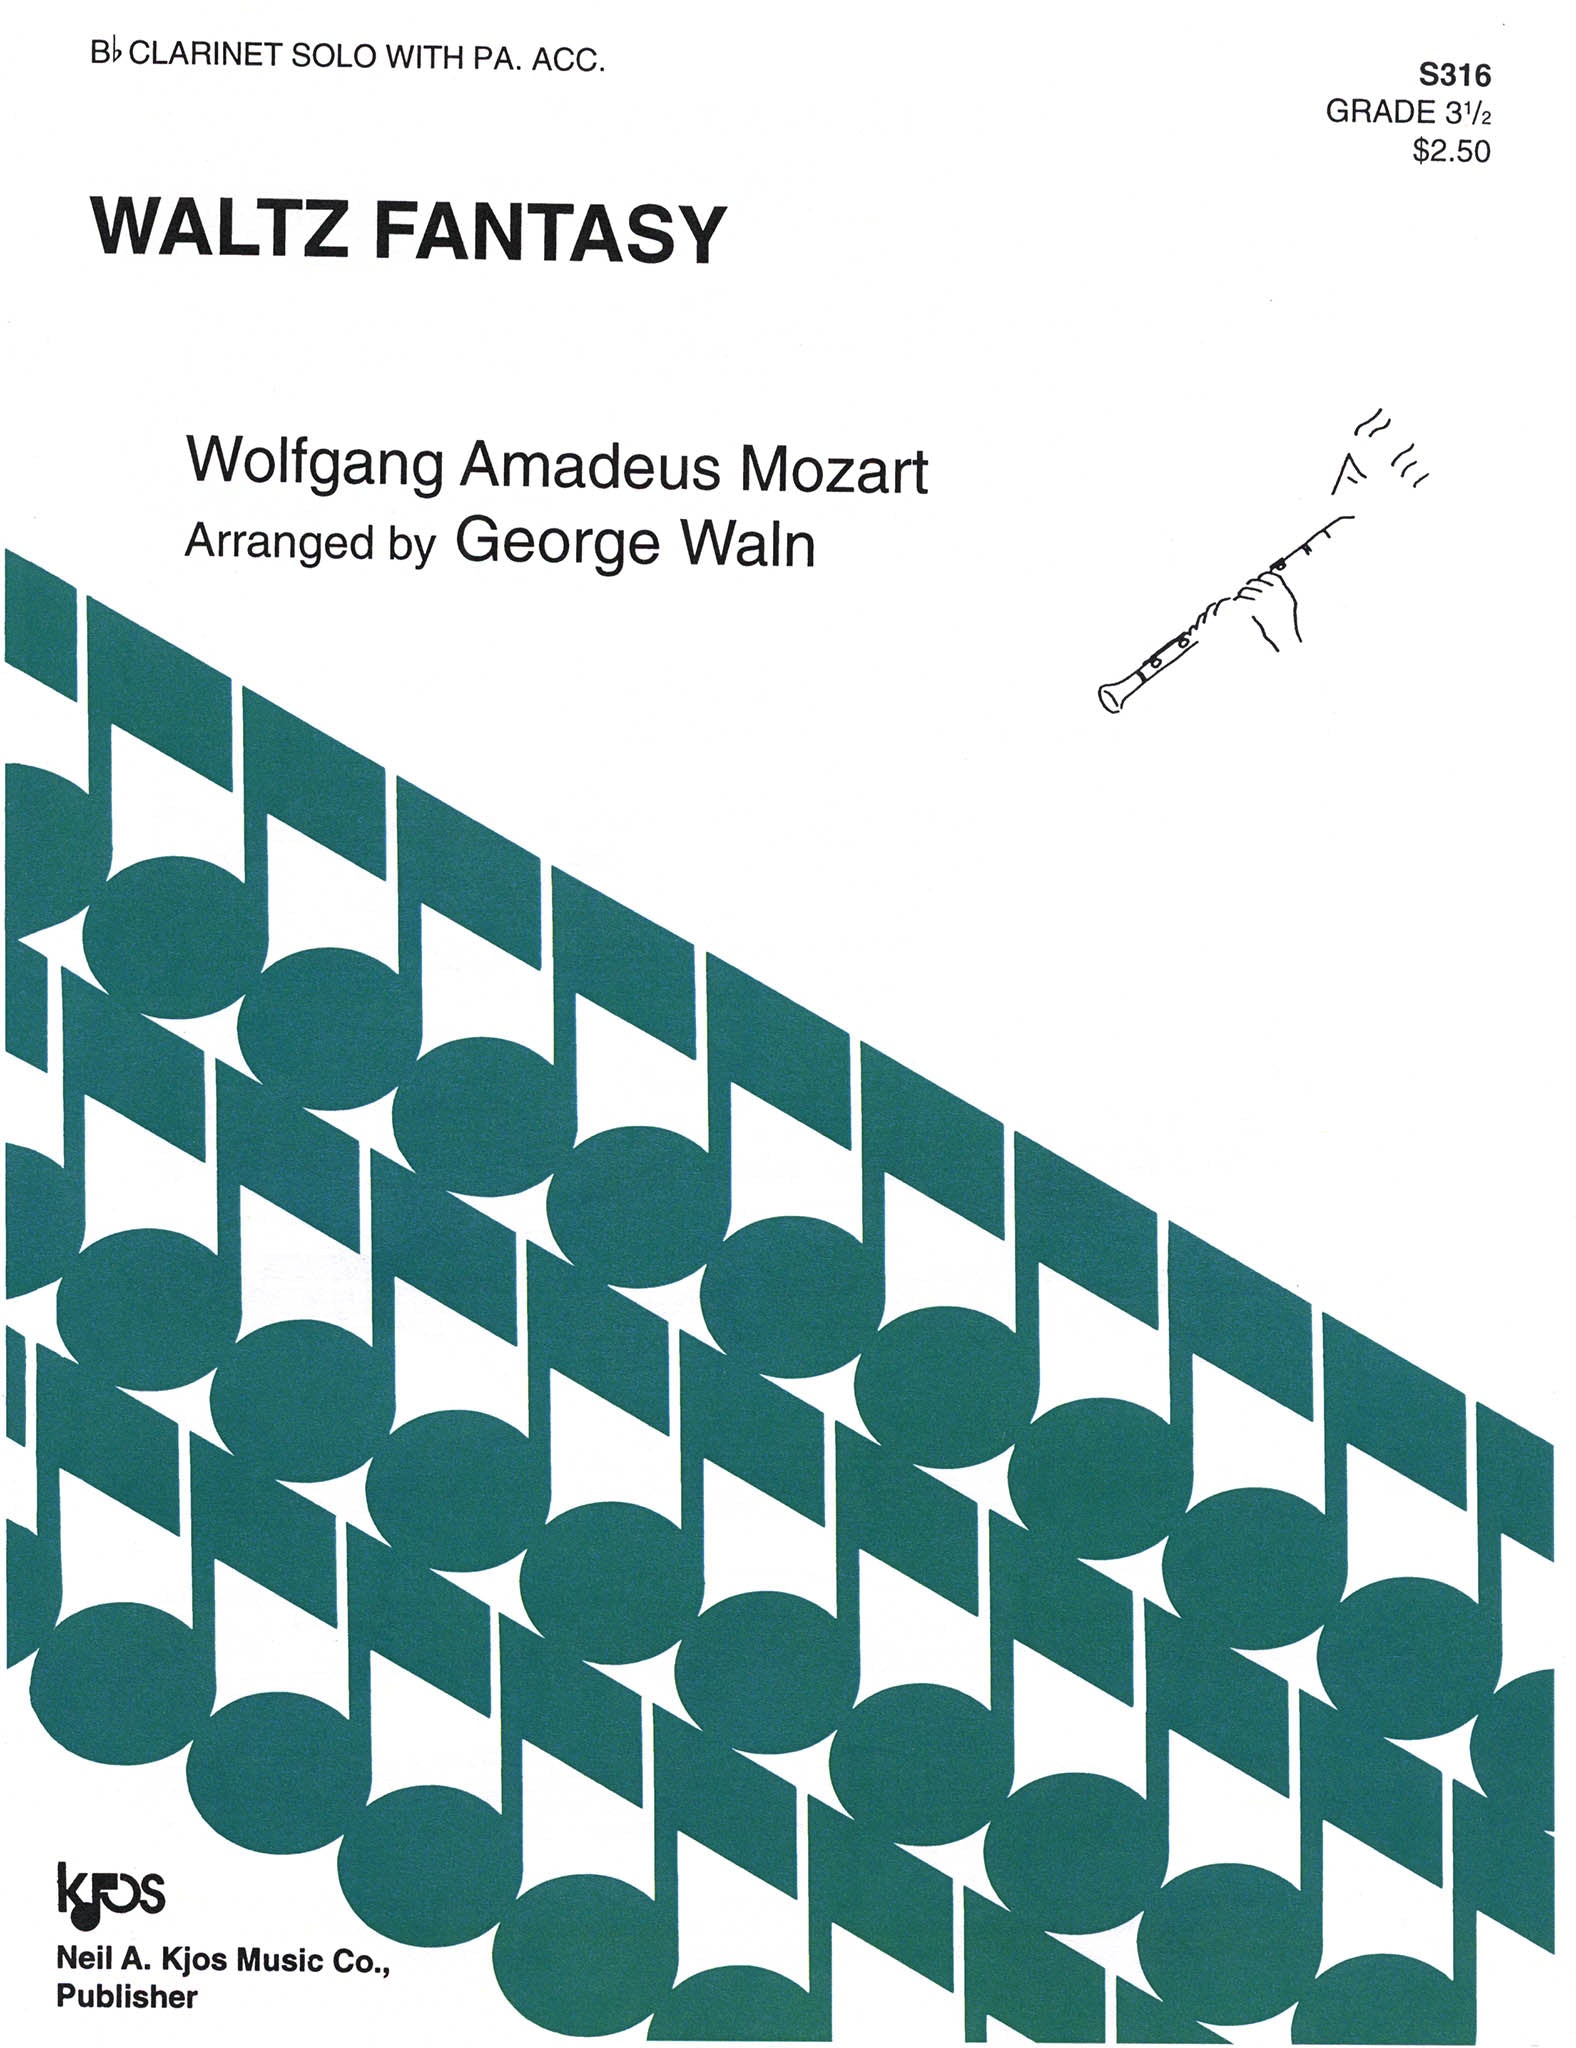 Waltz Fantasy Cover